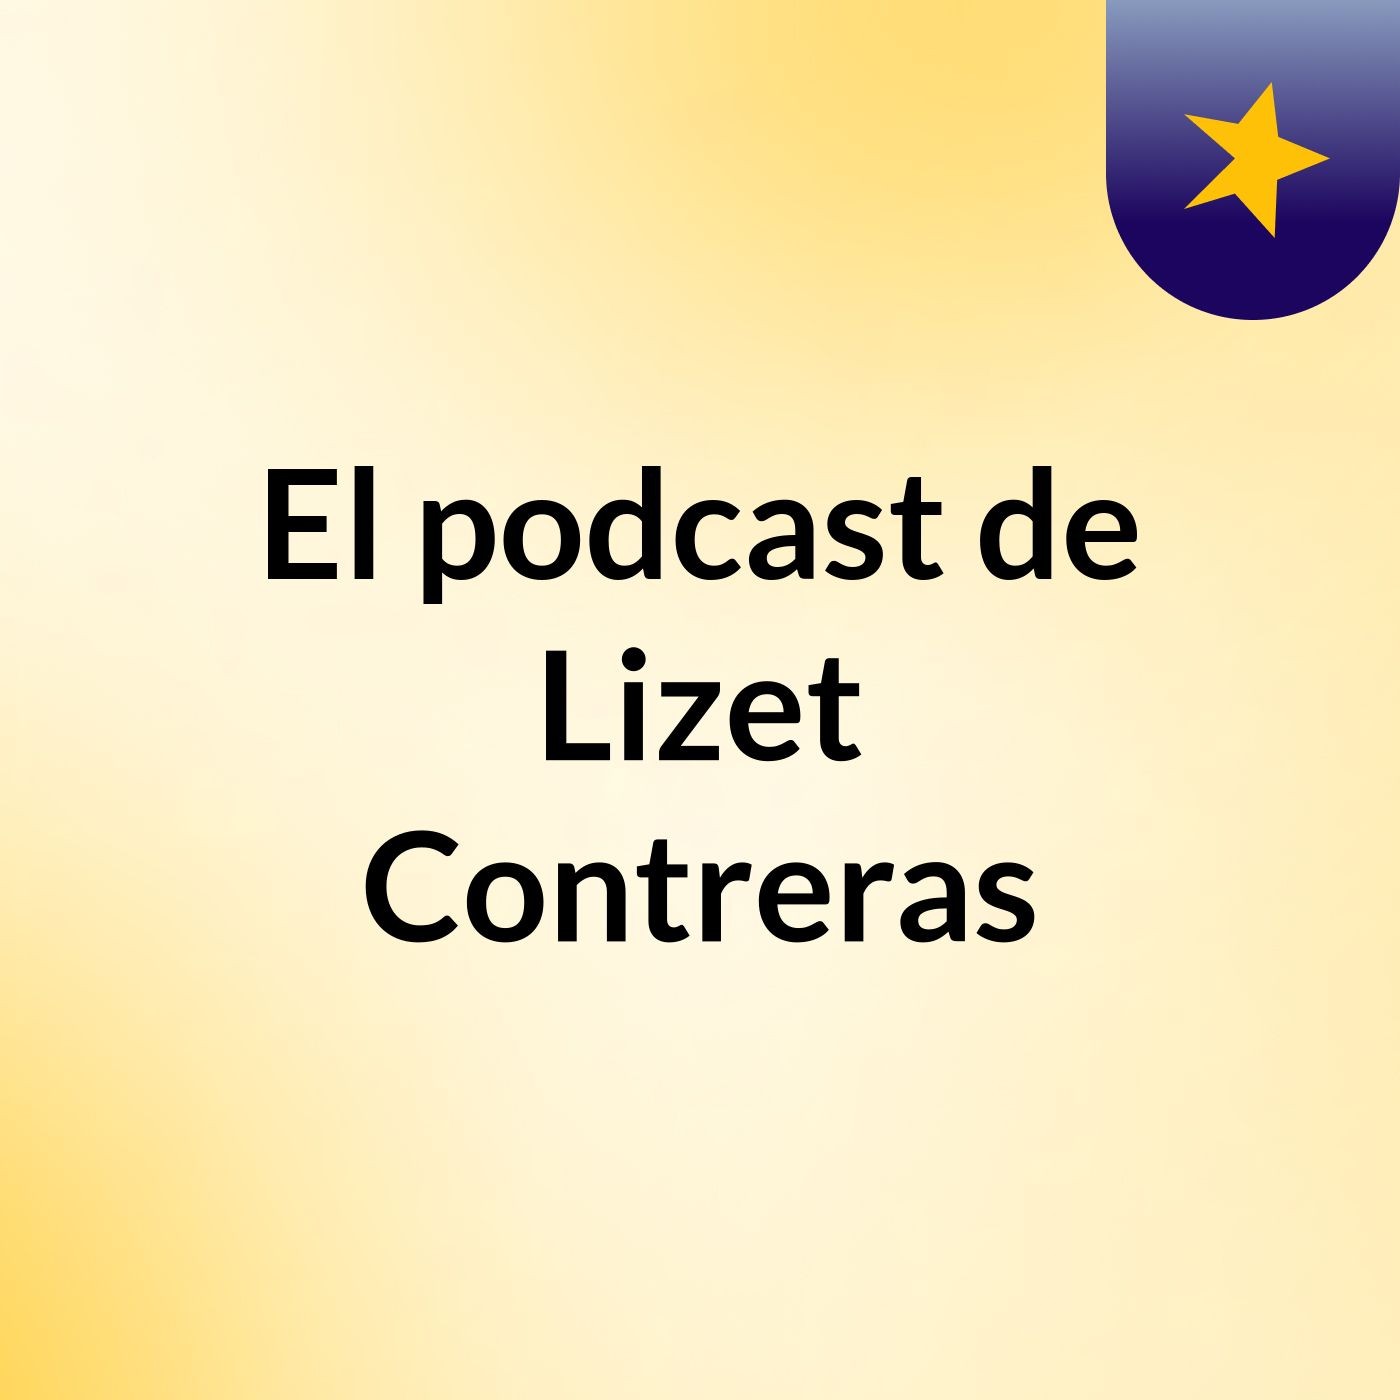 El podcast de Lizet Contreras